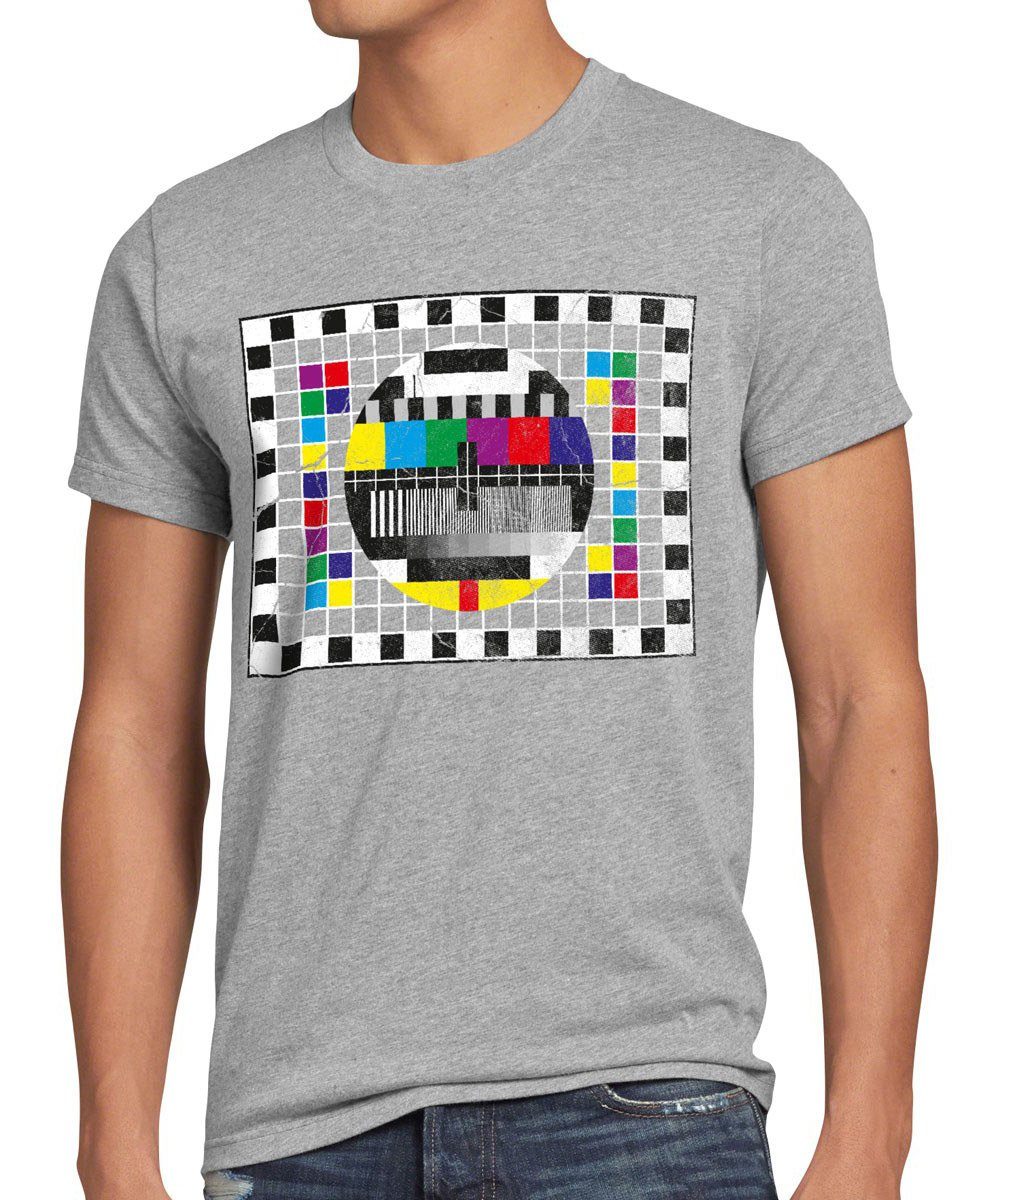 Print-Shirt sheldon T-Shirt meliert retro big monitor TV Testbild fernseher grau Herren style3 bang theory LED